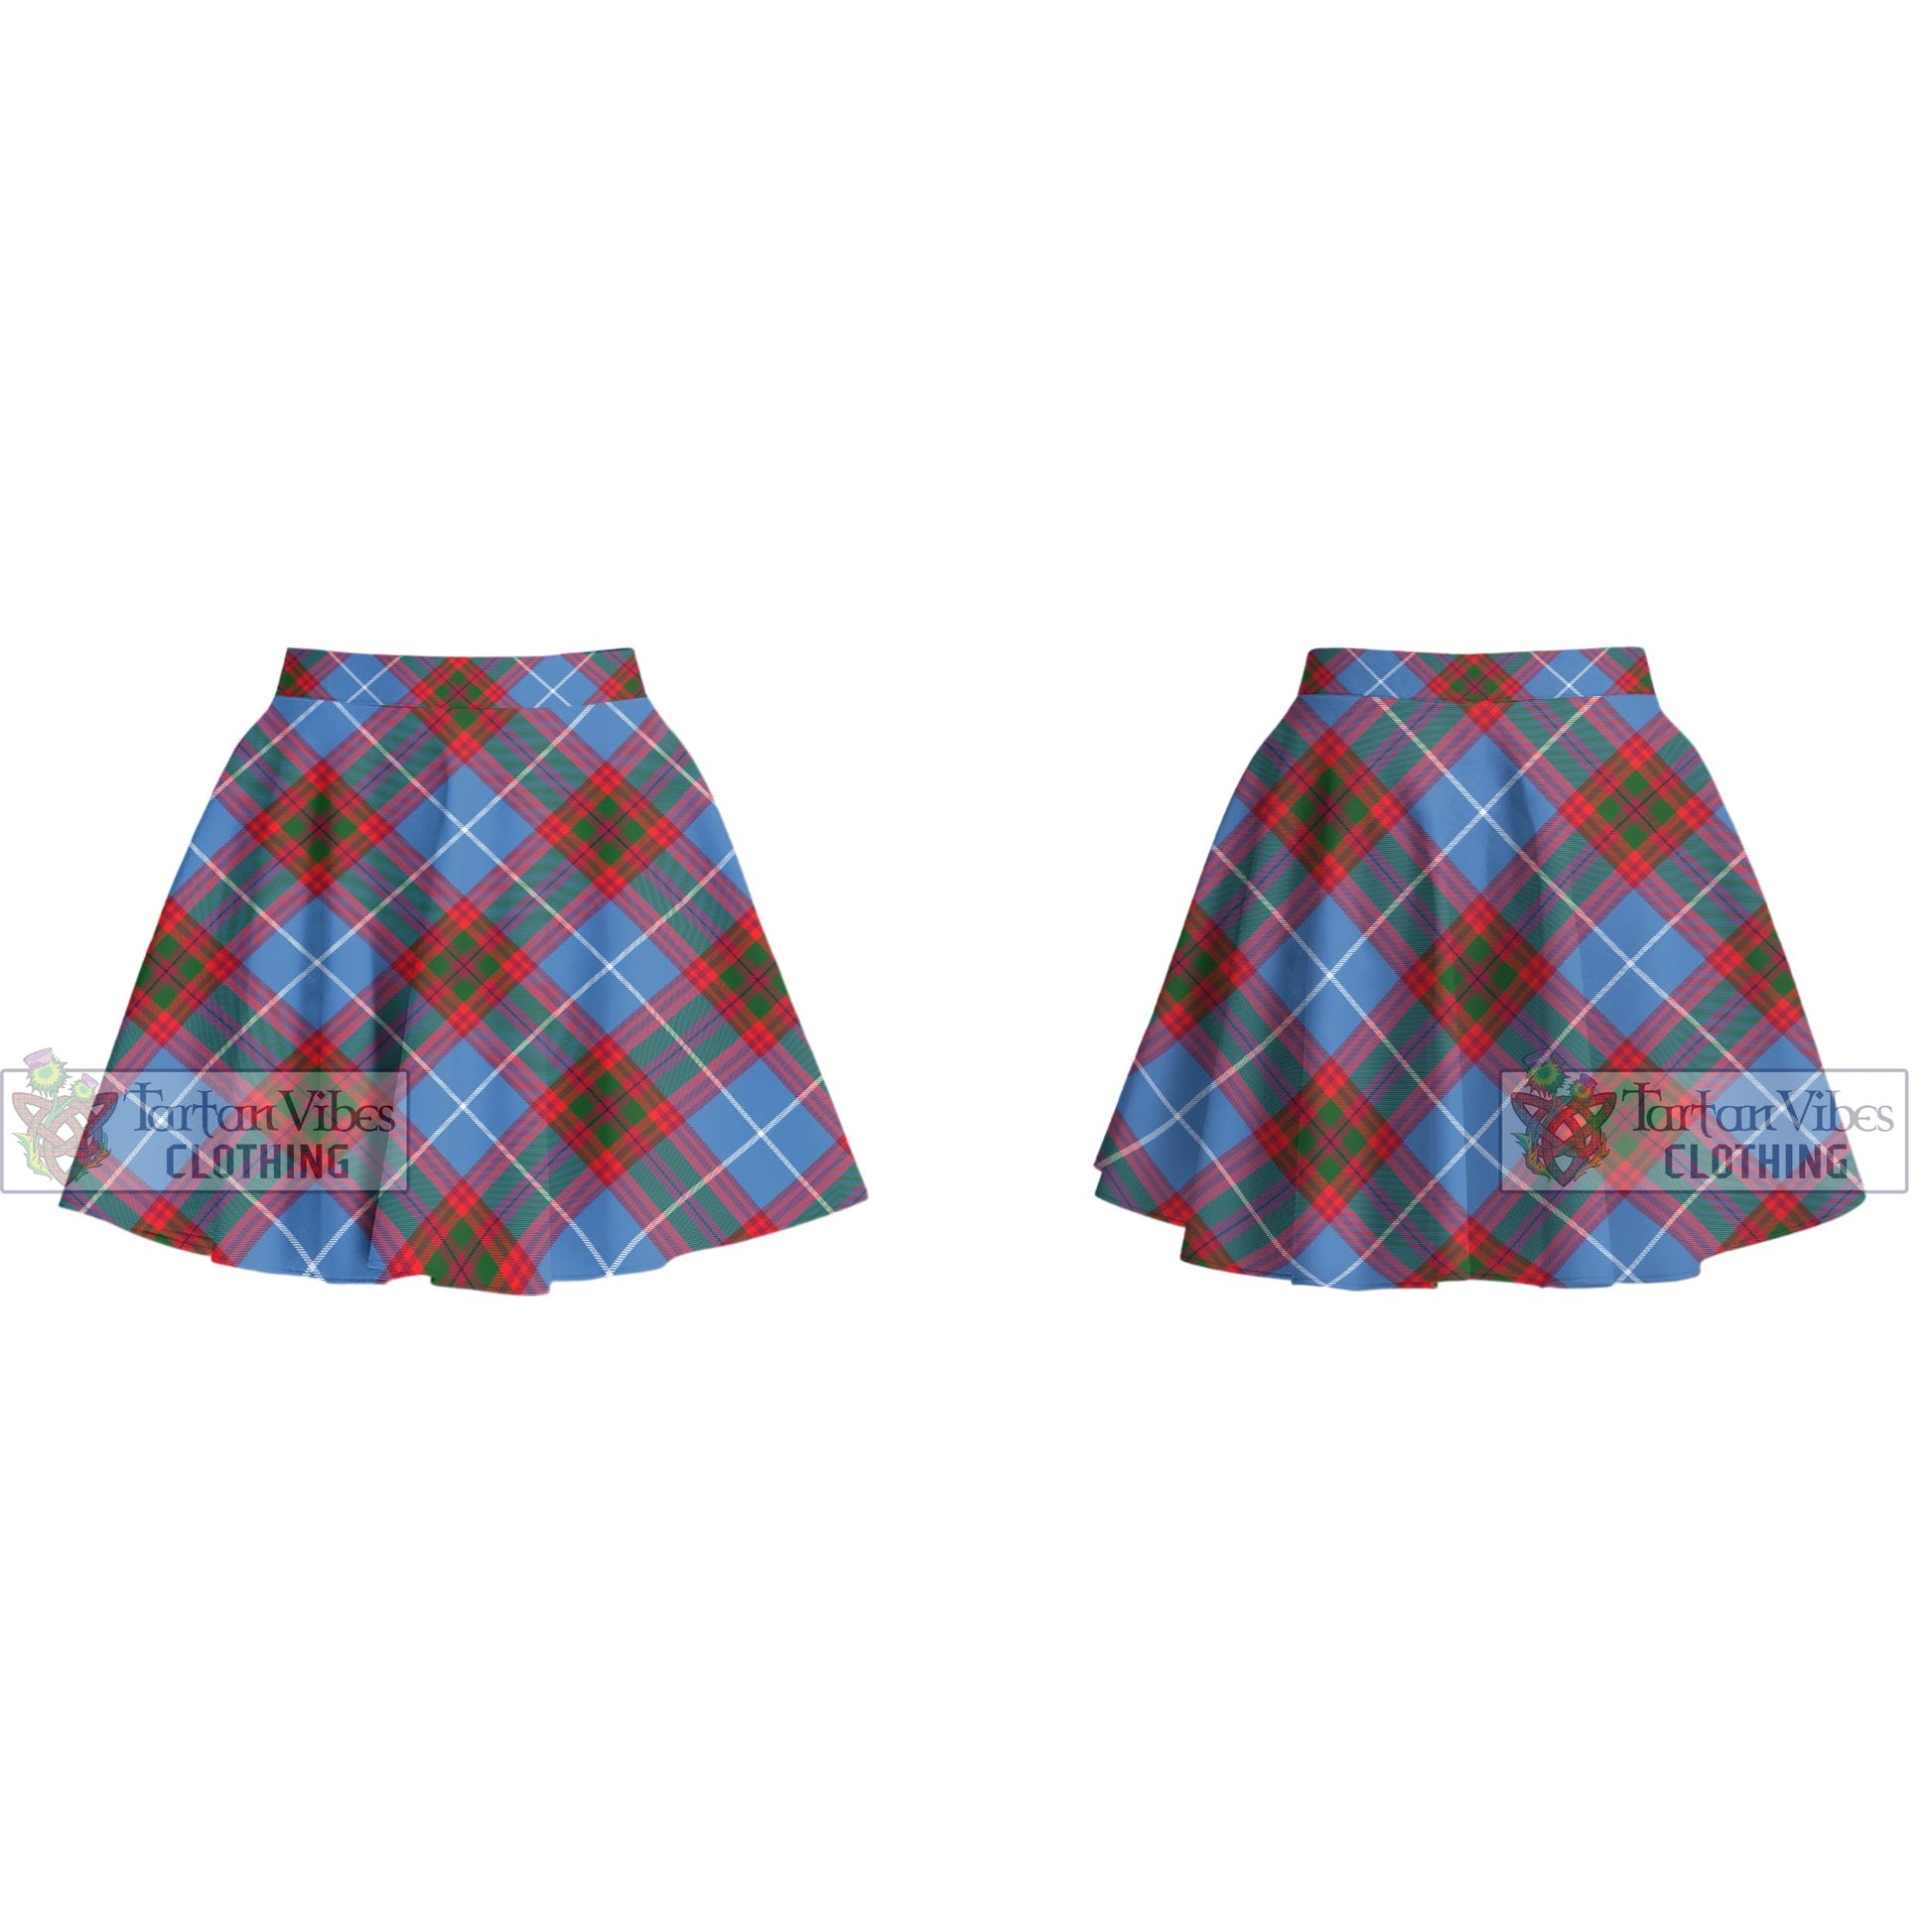 Tartan Vibes Clothing Congilton Tartan Women's Plated Mini Skirt